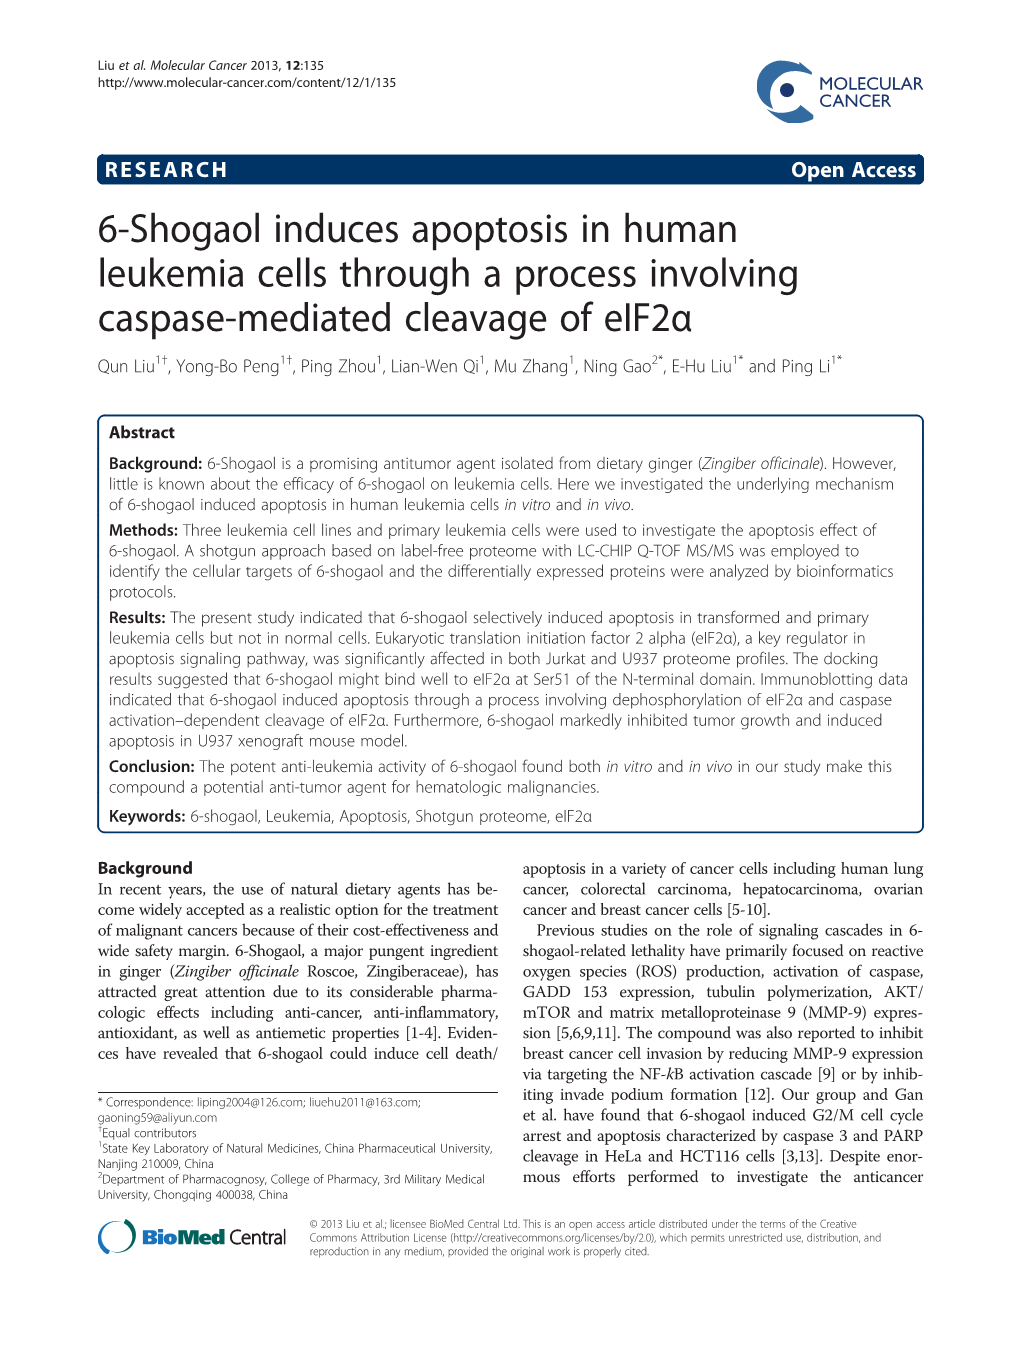 6-Shogaol Induces Apoptosis in Human Leukemia Cells Through A